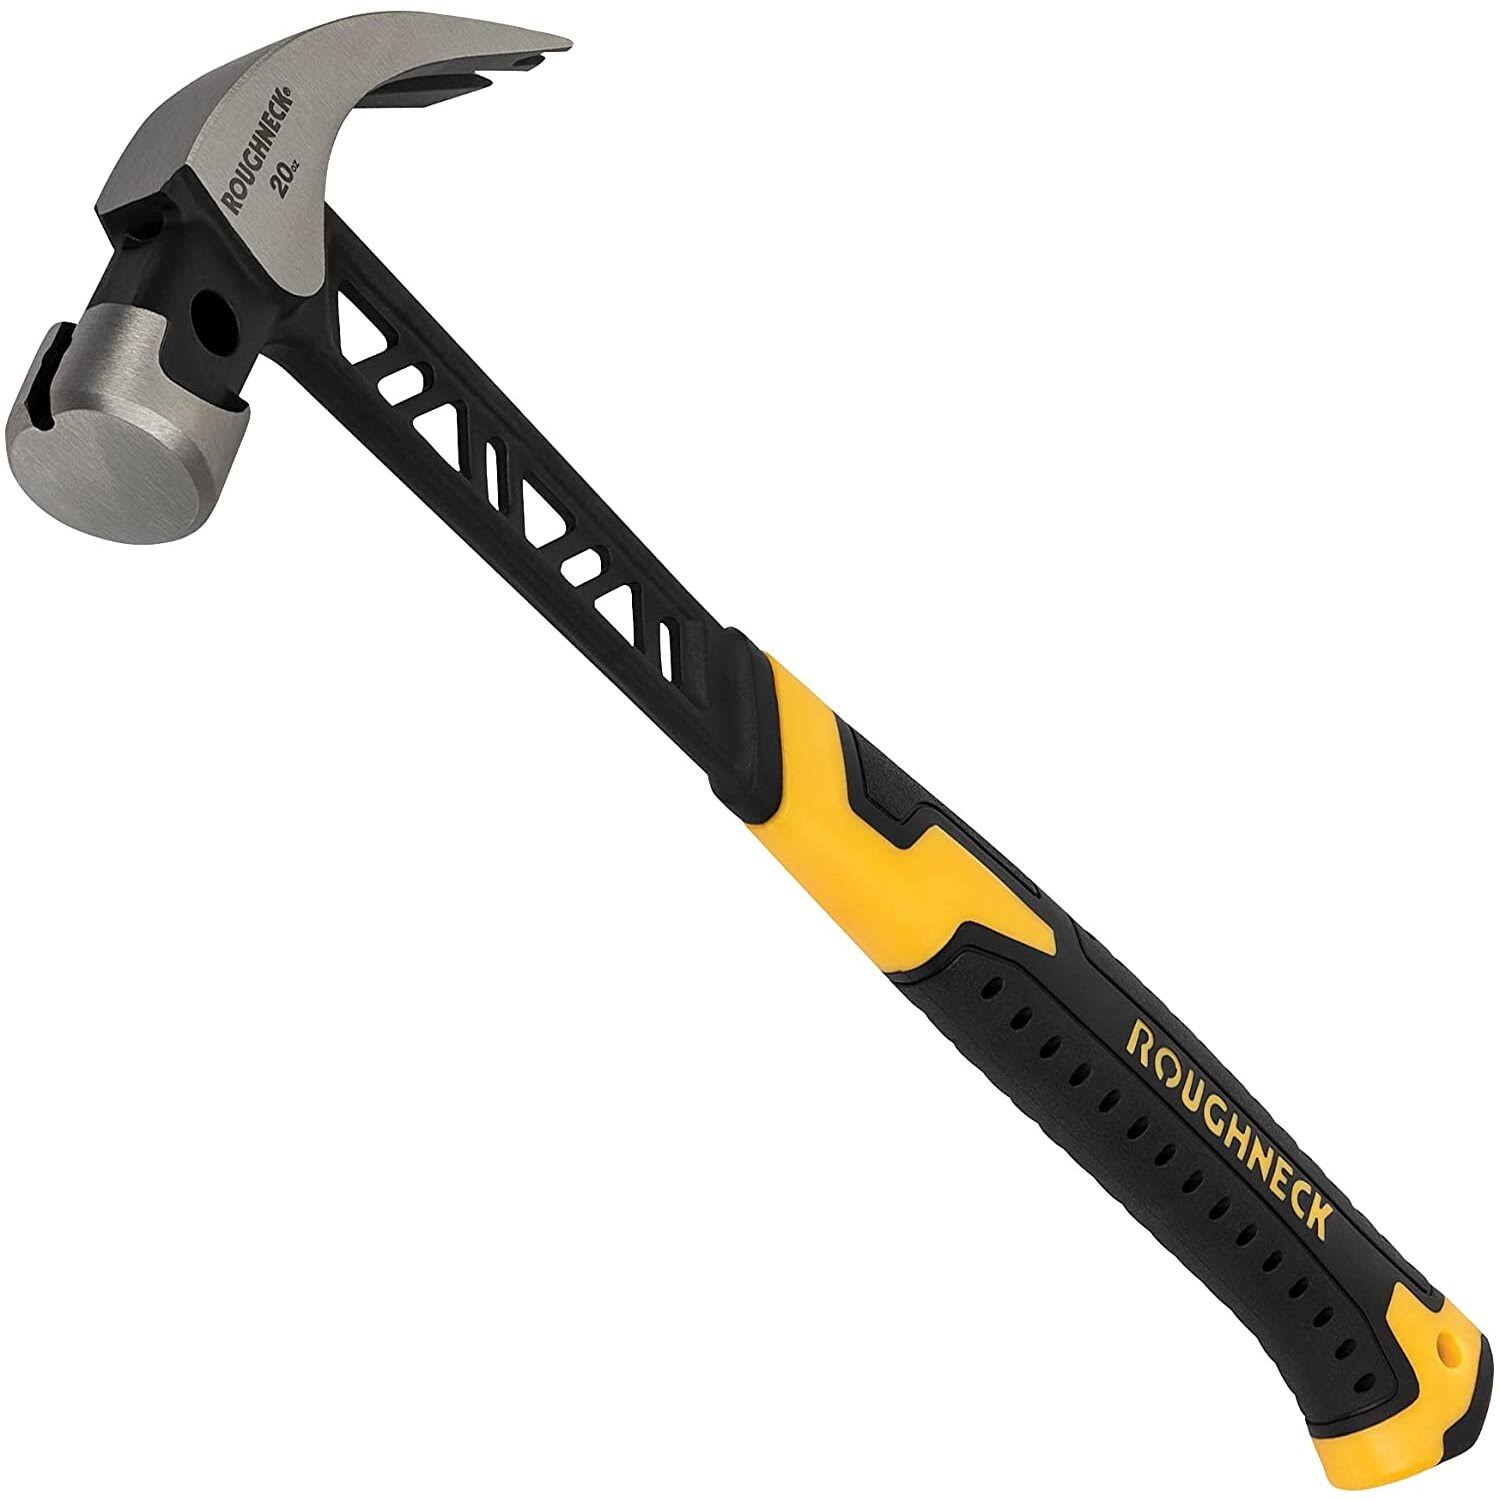 Roughneck ROU11010 Gorilla V-Series Claw Hammer 567g (20oz)